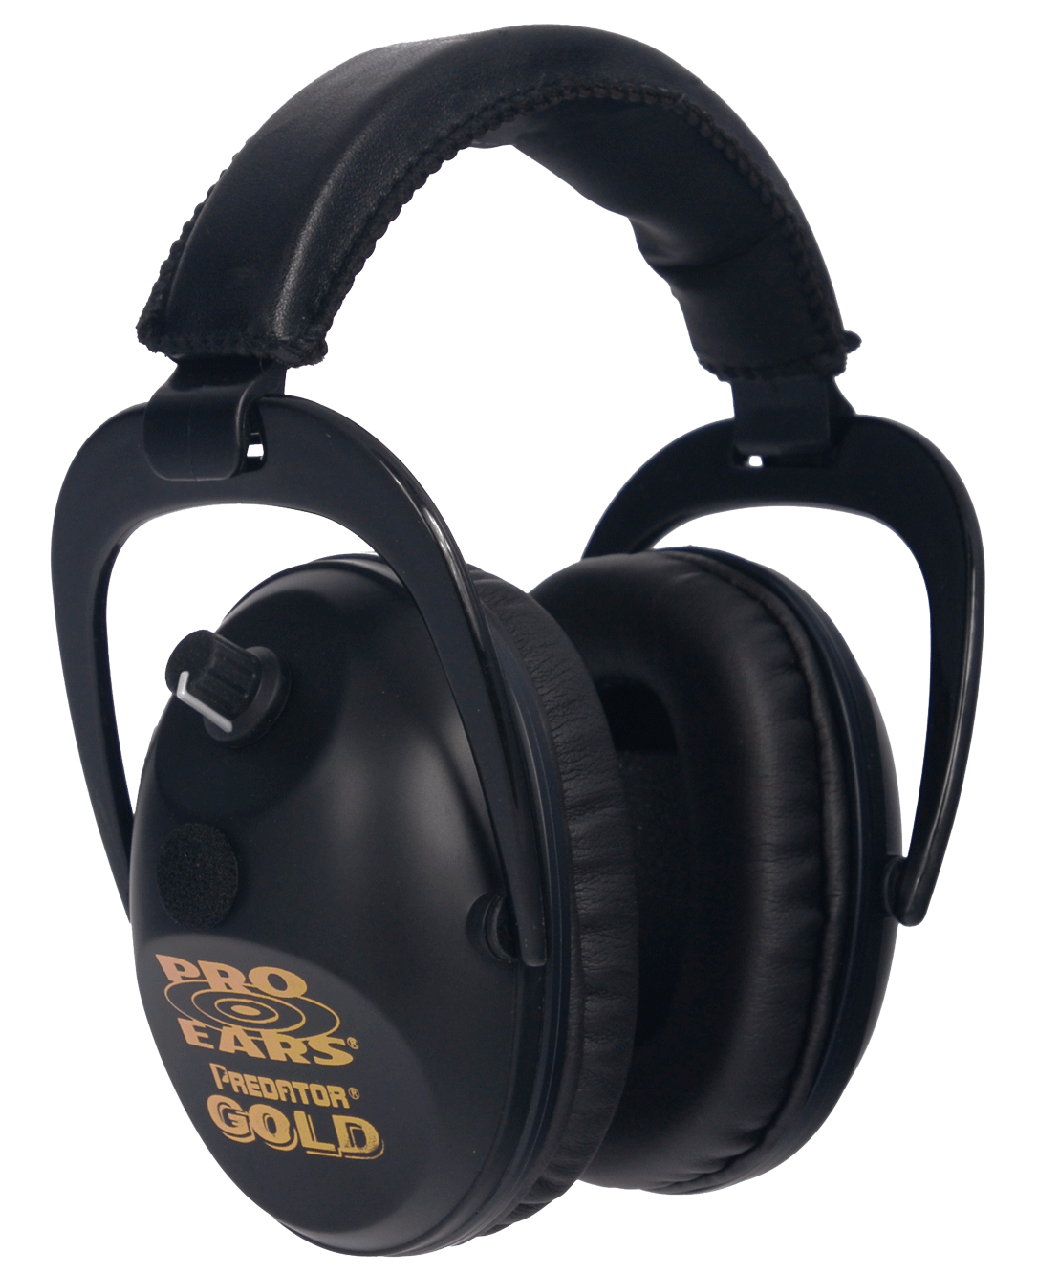 Pro Ears Pro Ears Predator Gold, Proears Gsp300blk Predator Gold Nrr26 Shooting